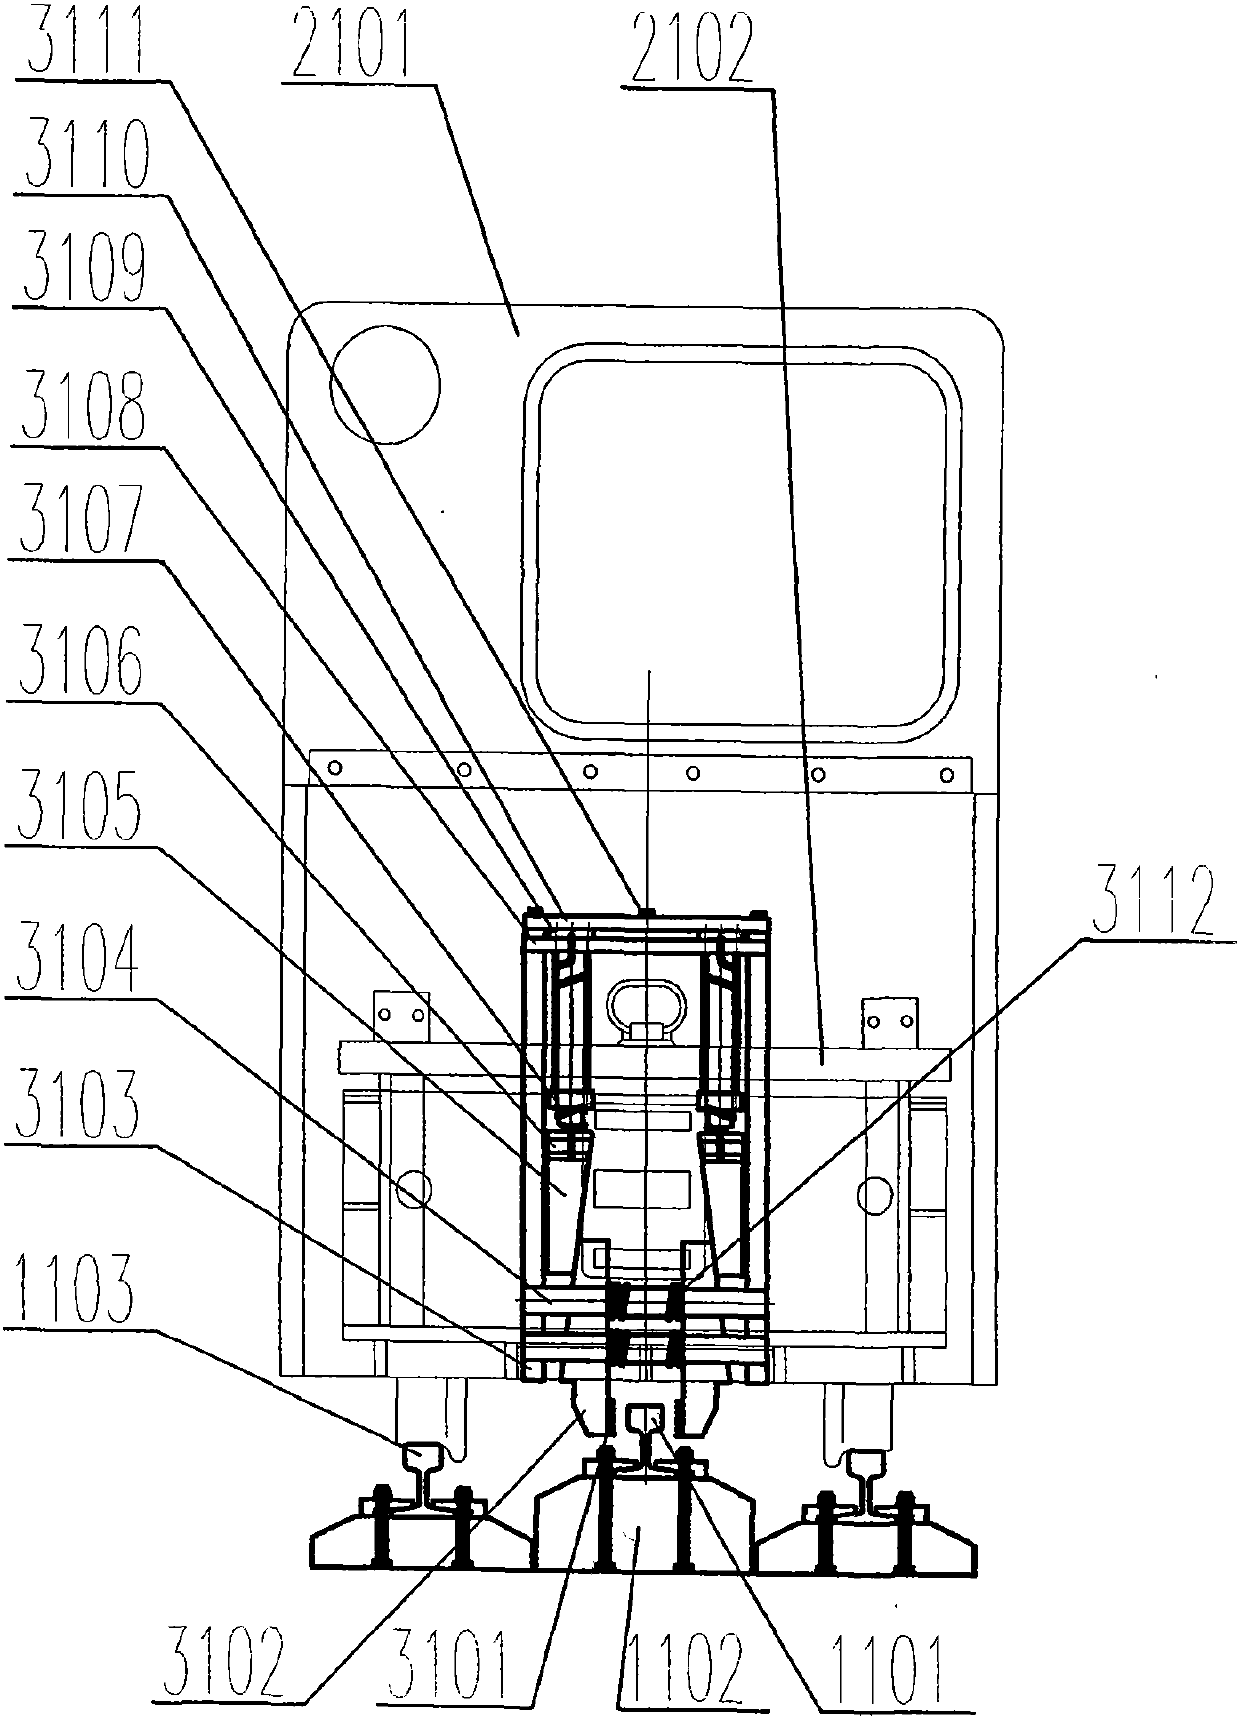 A locomotive traction braking method